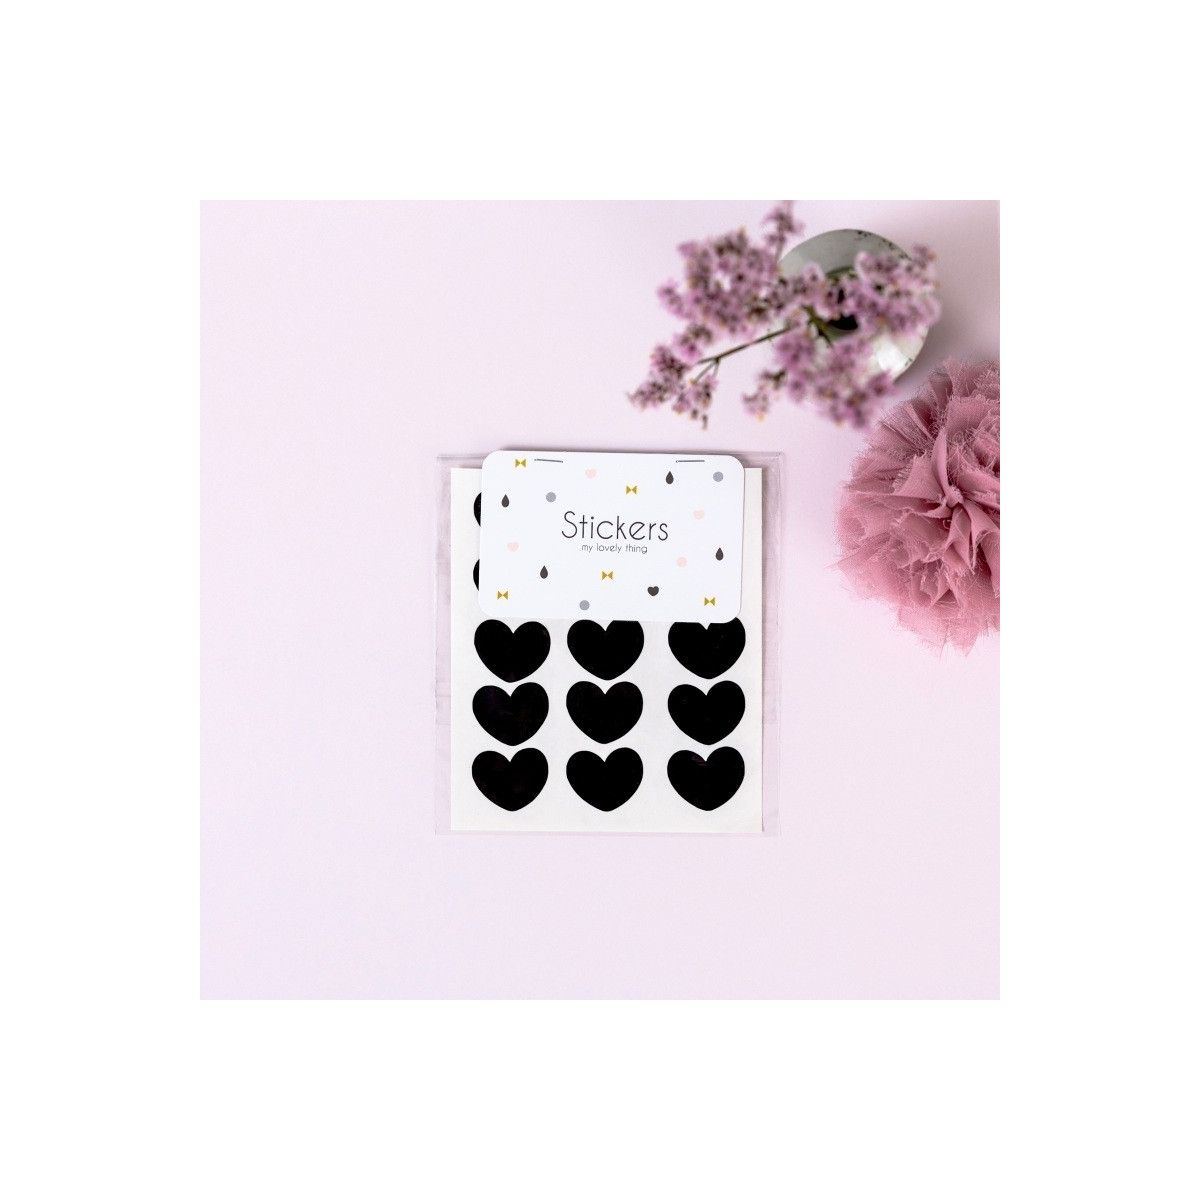 My Lovely Thing - Stickers Heart black - Обои, вешалки и наклейки - 1